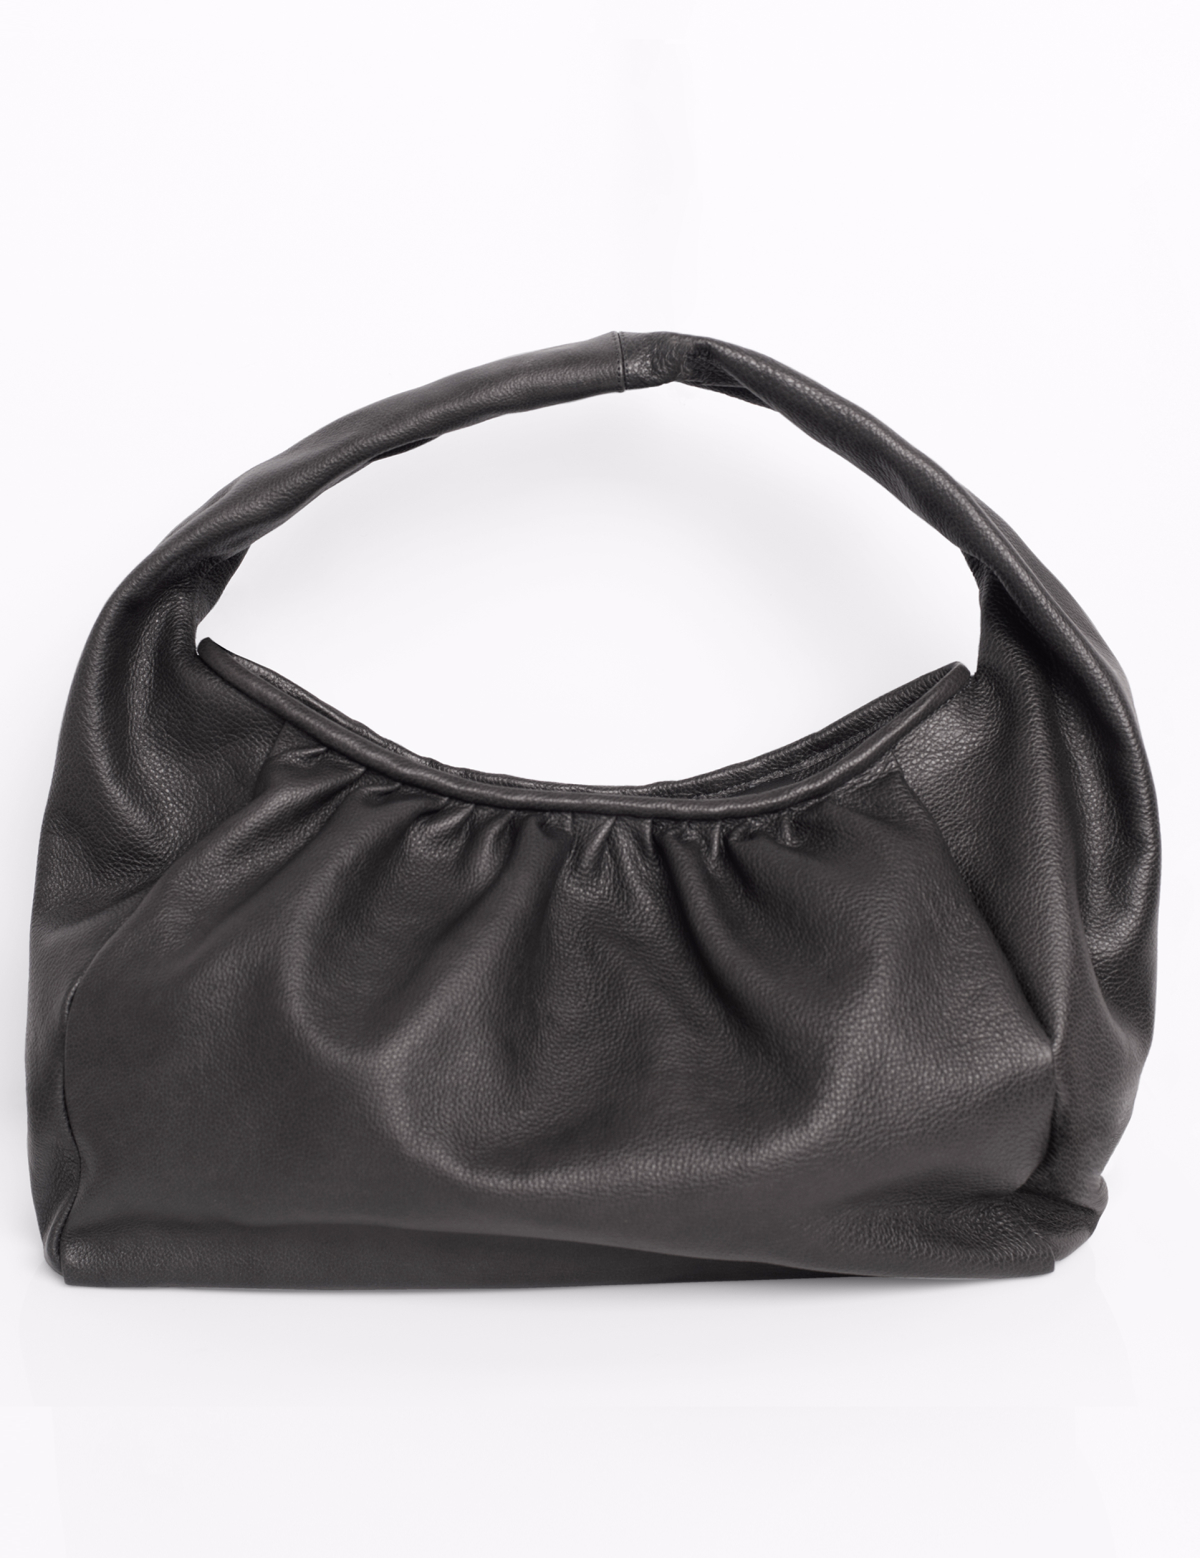 Look Made With Love Woman's Handbag 565 Toscana